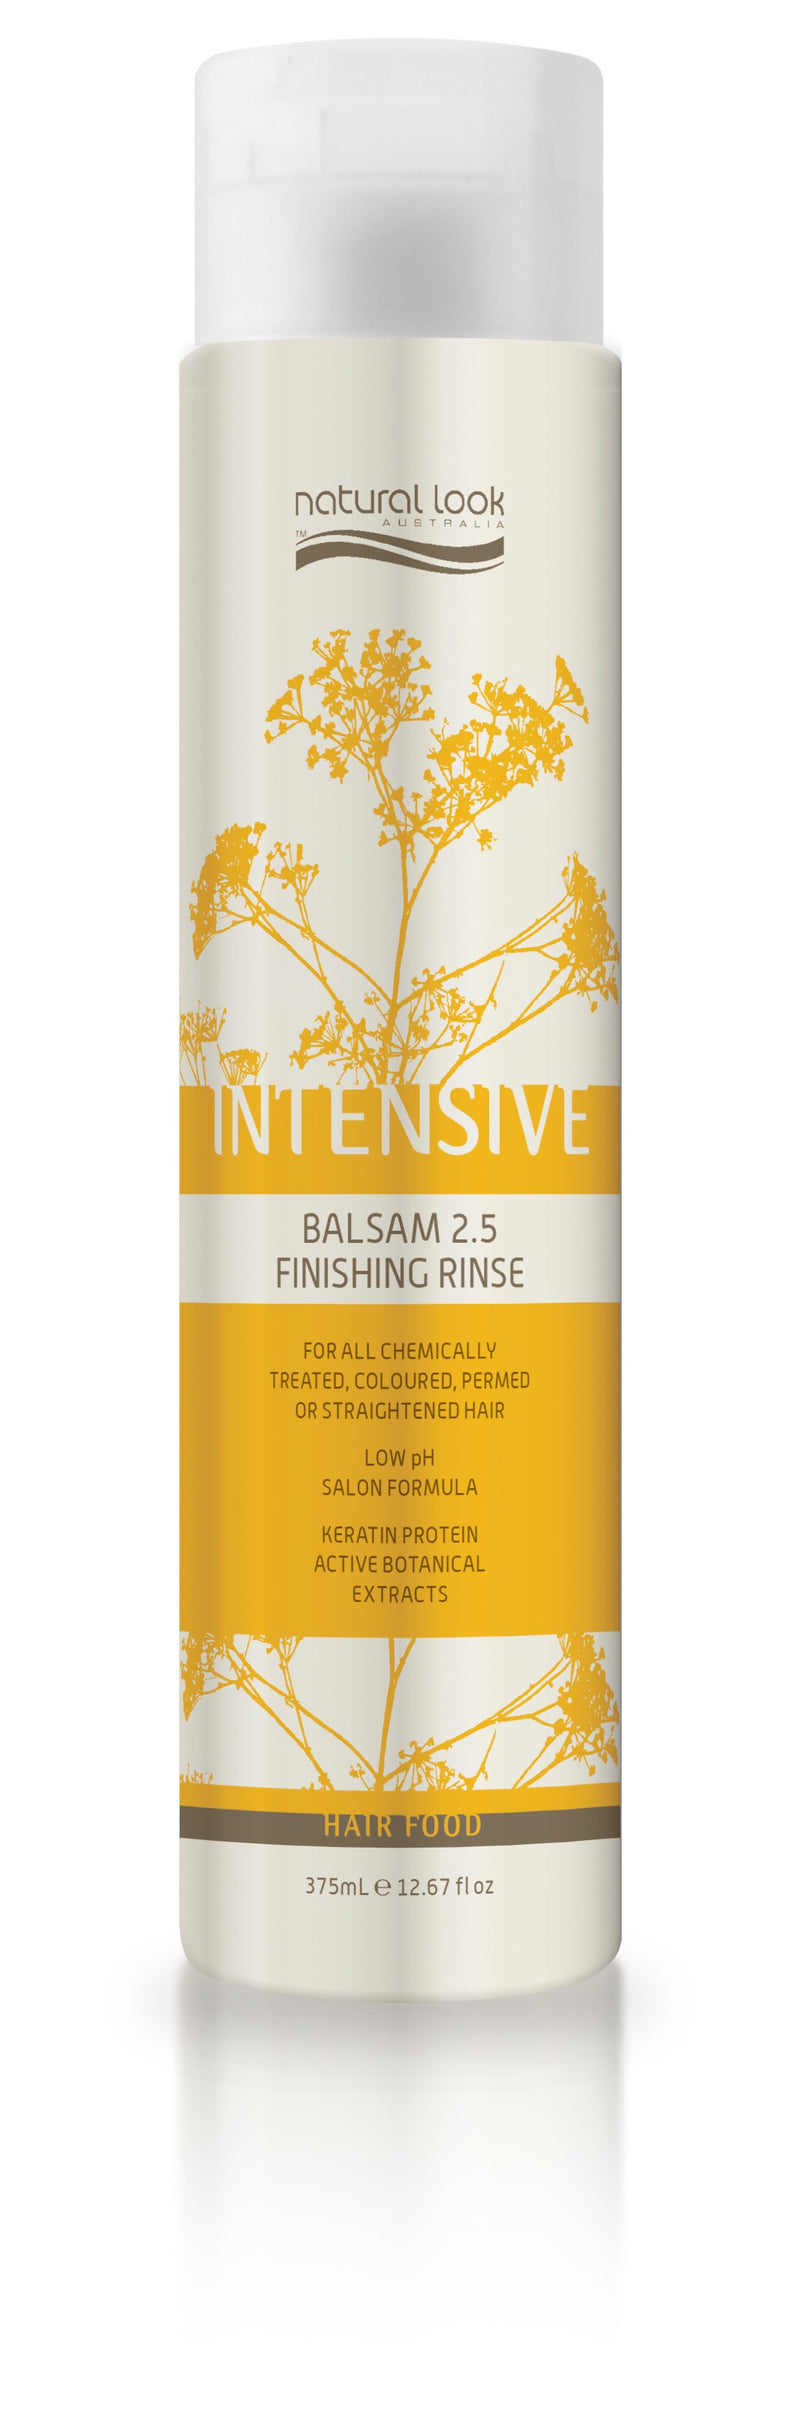 Natural Look Intensive Balsam 2.5 Finishing Rinse 375ml